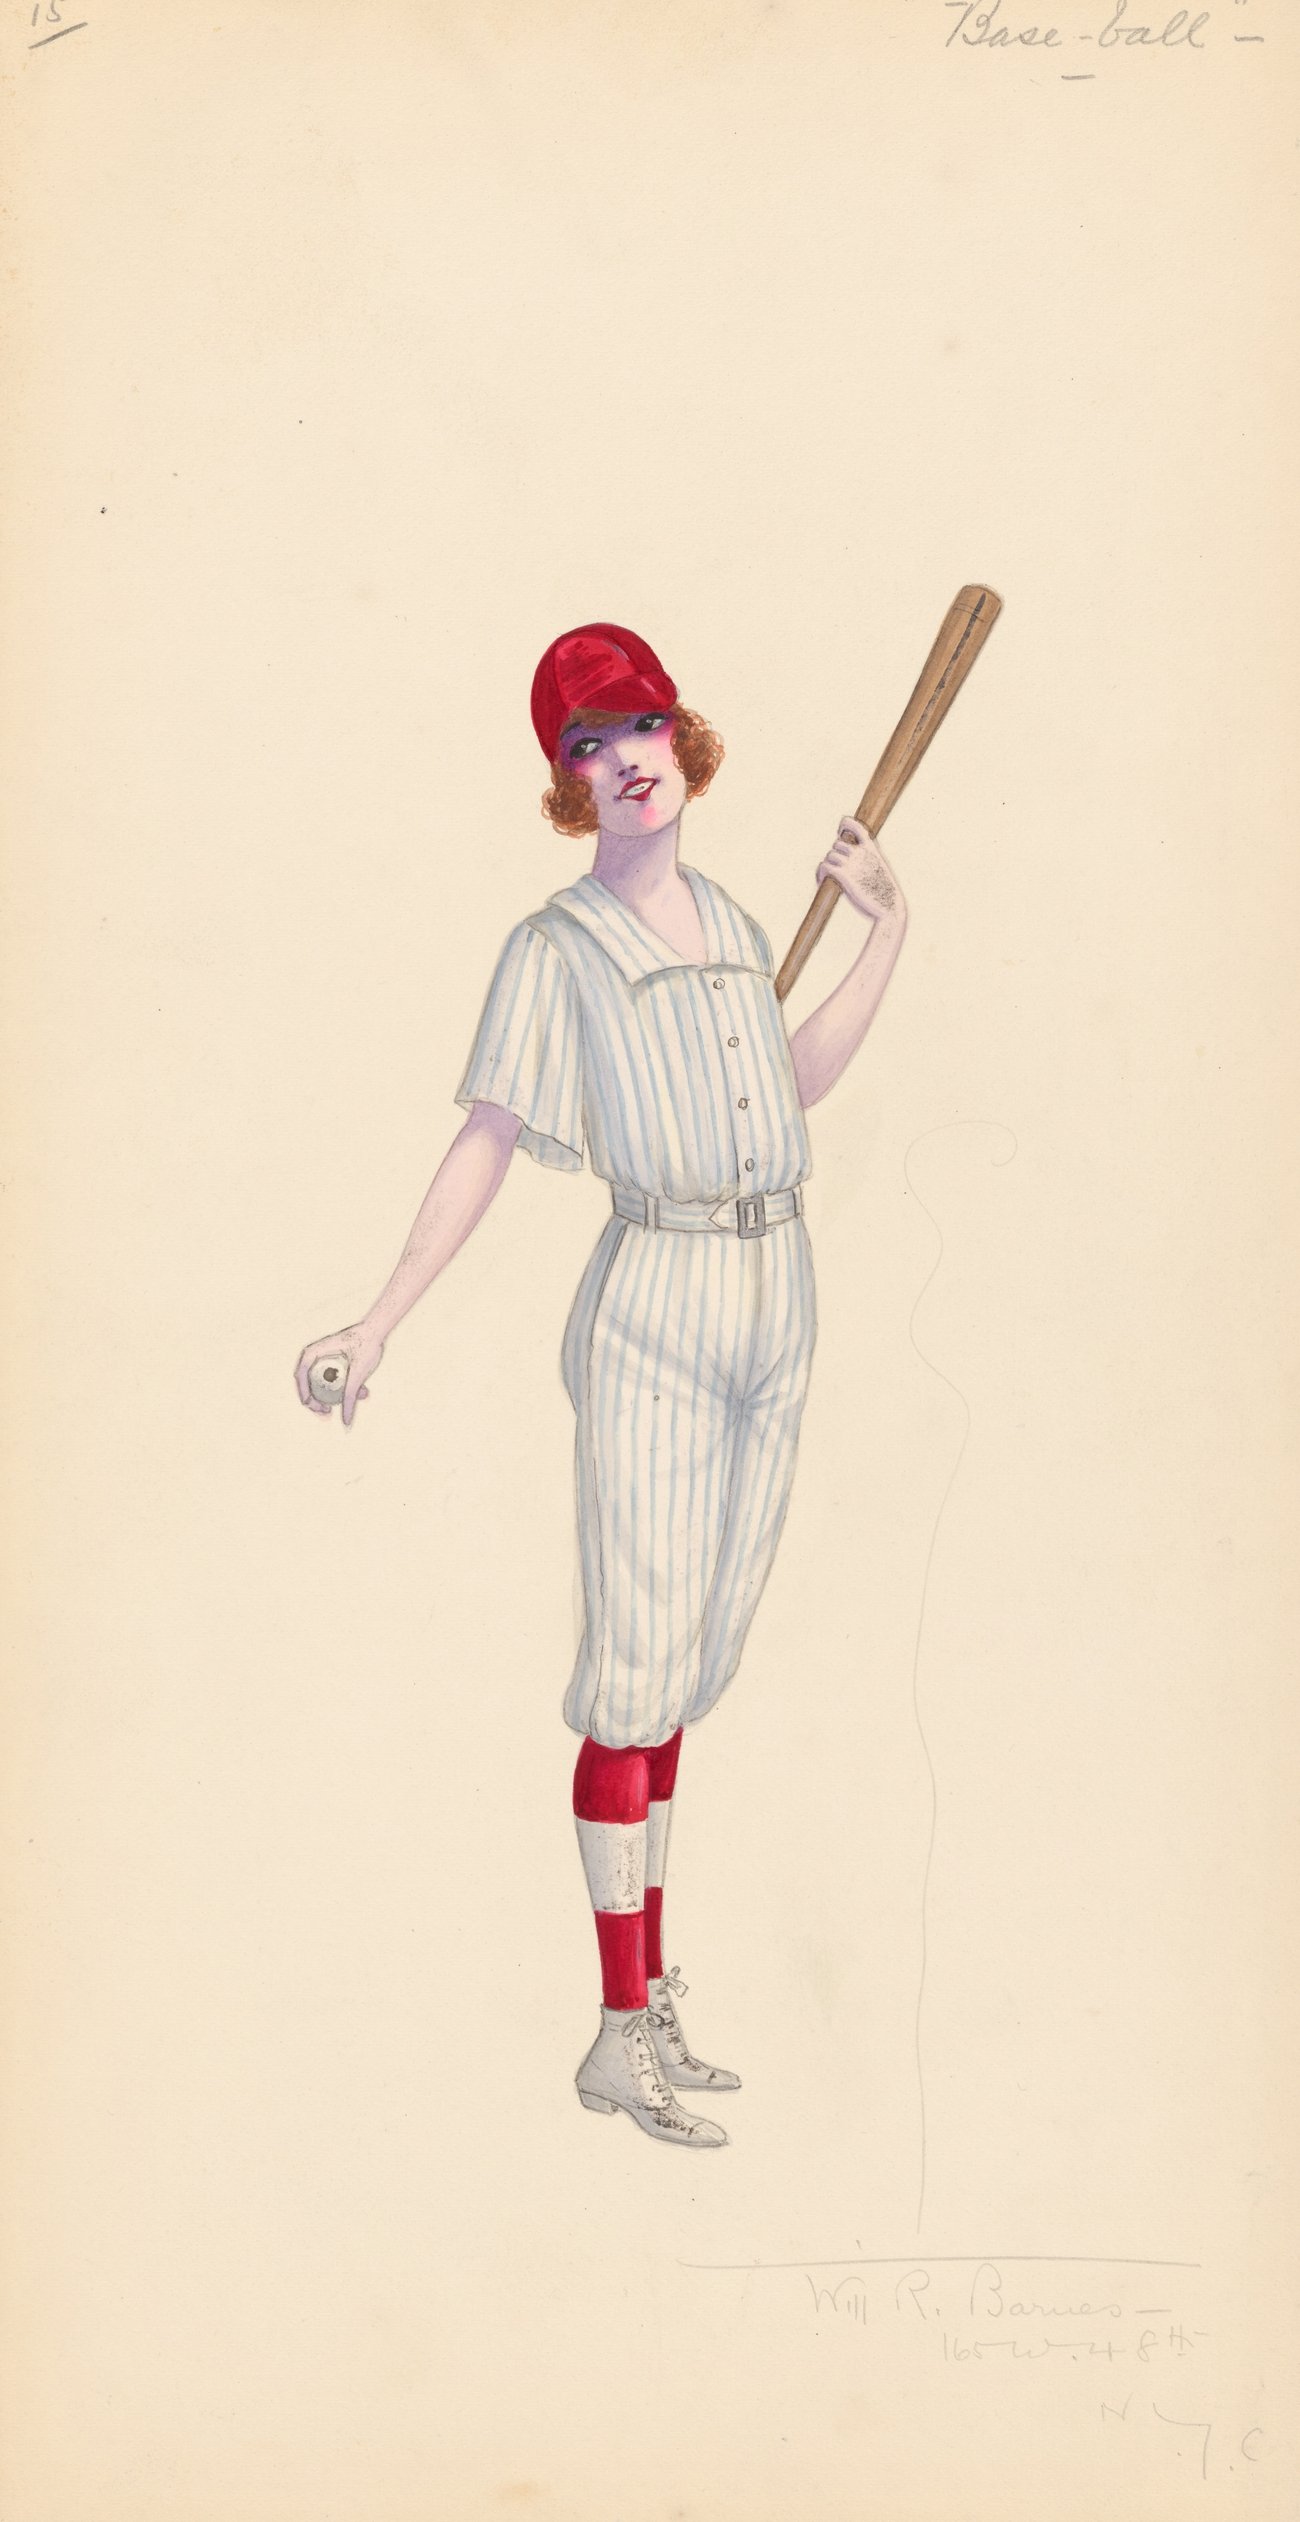 Baseball, 15 (1912 - 1924)